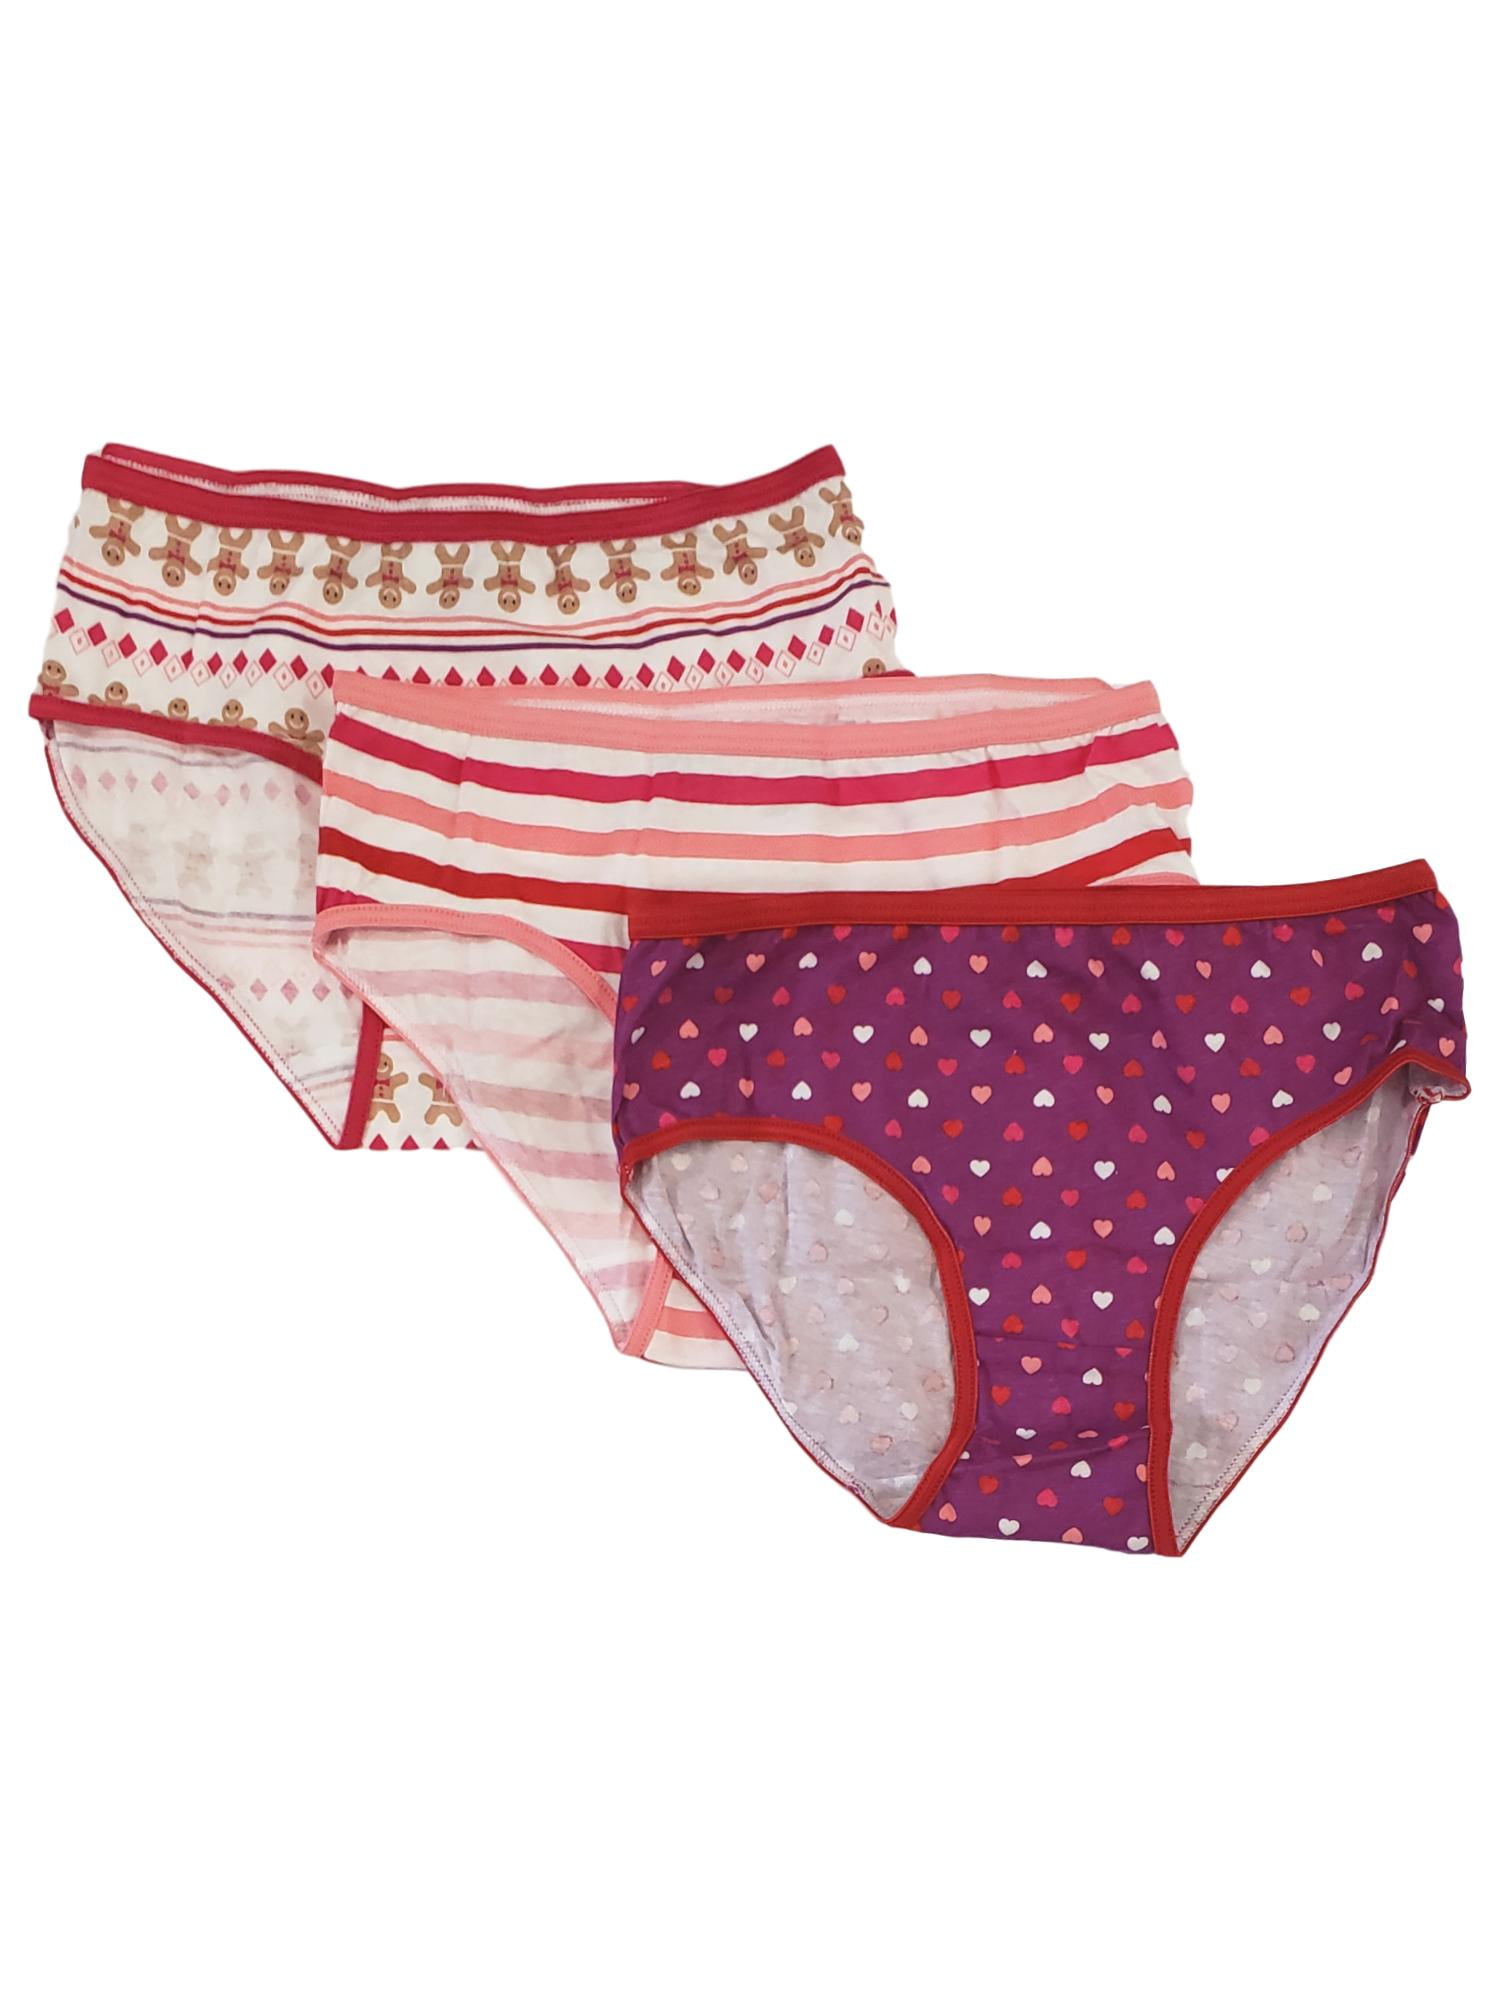 Cat& Jack Girls Briefs Print Panties Underwear 3 Count Pack 100% Cotton M  (7/8)